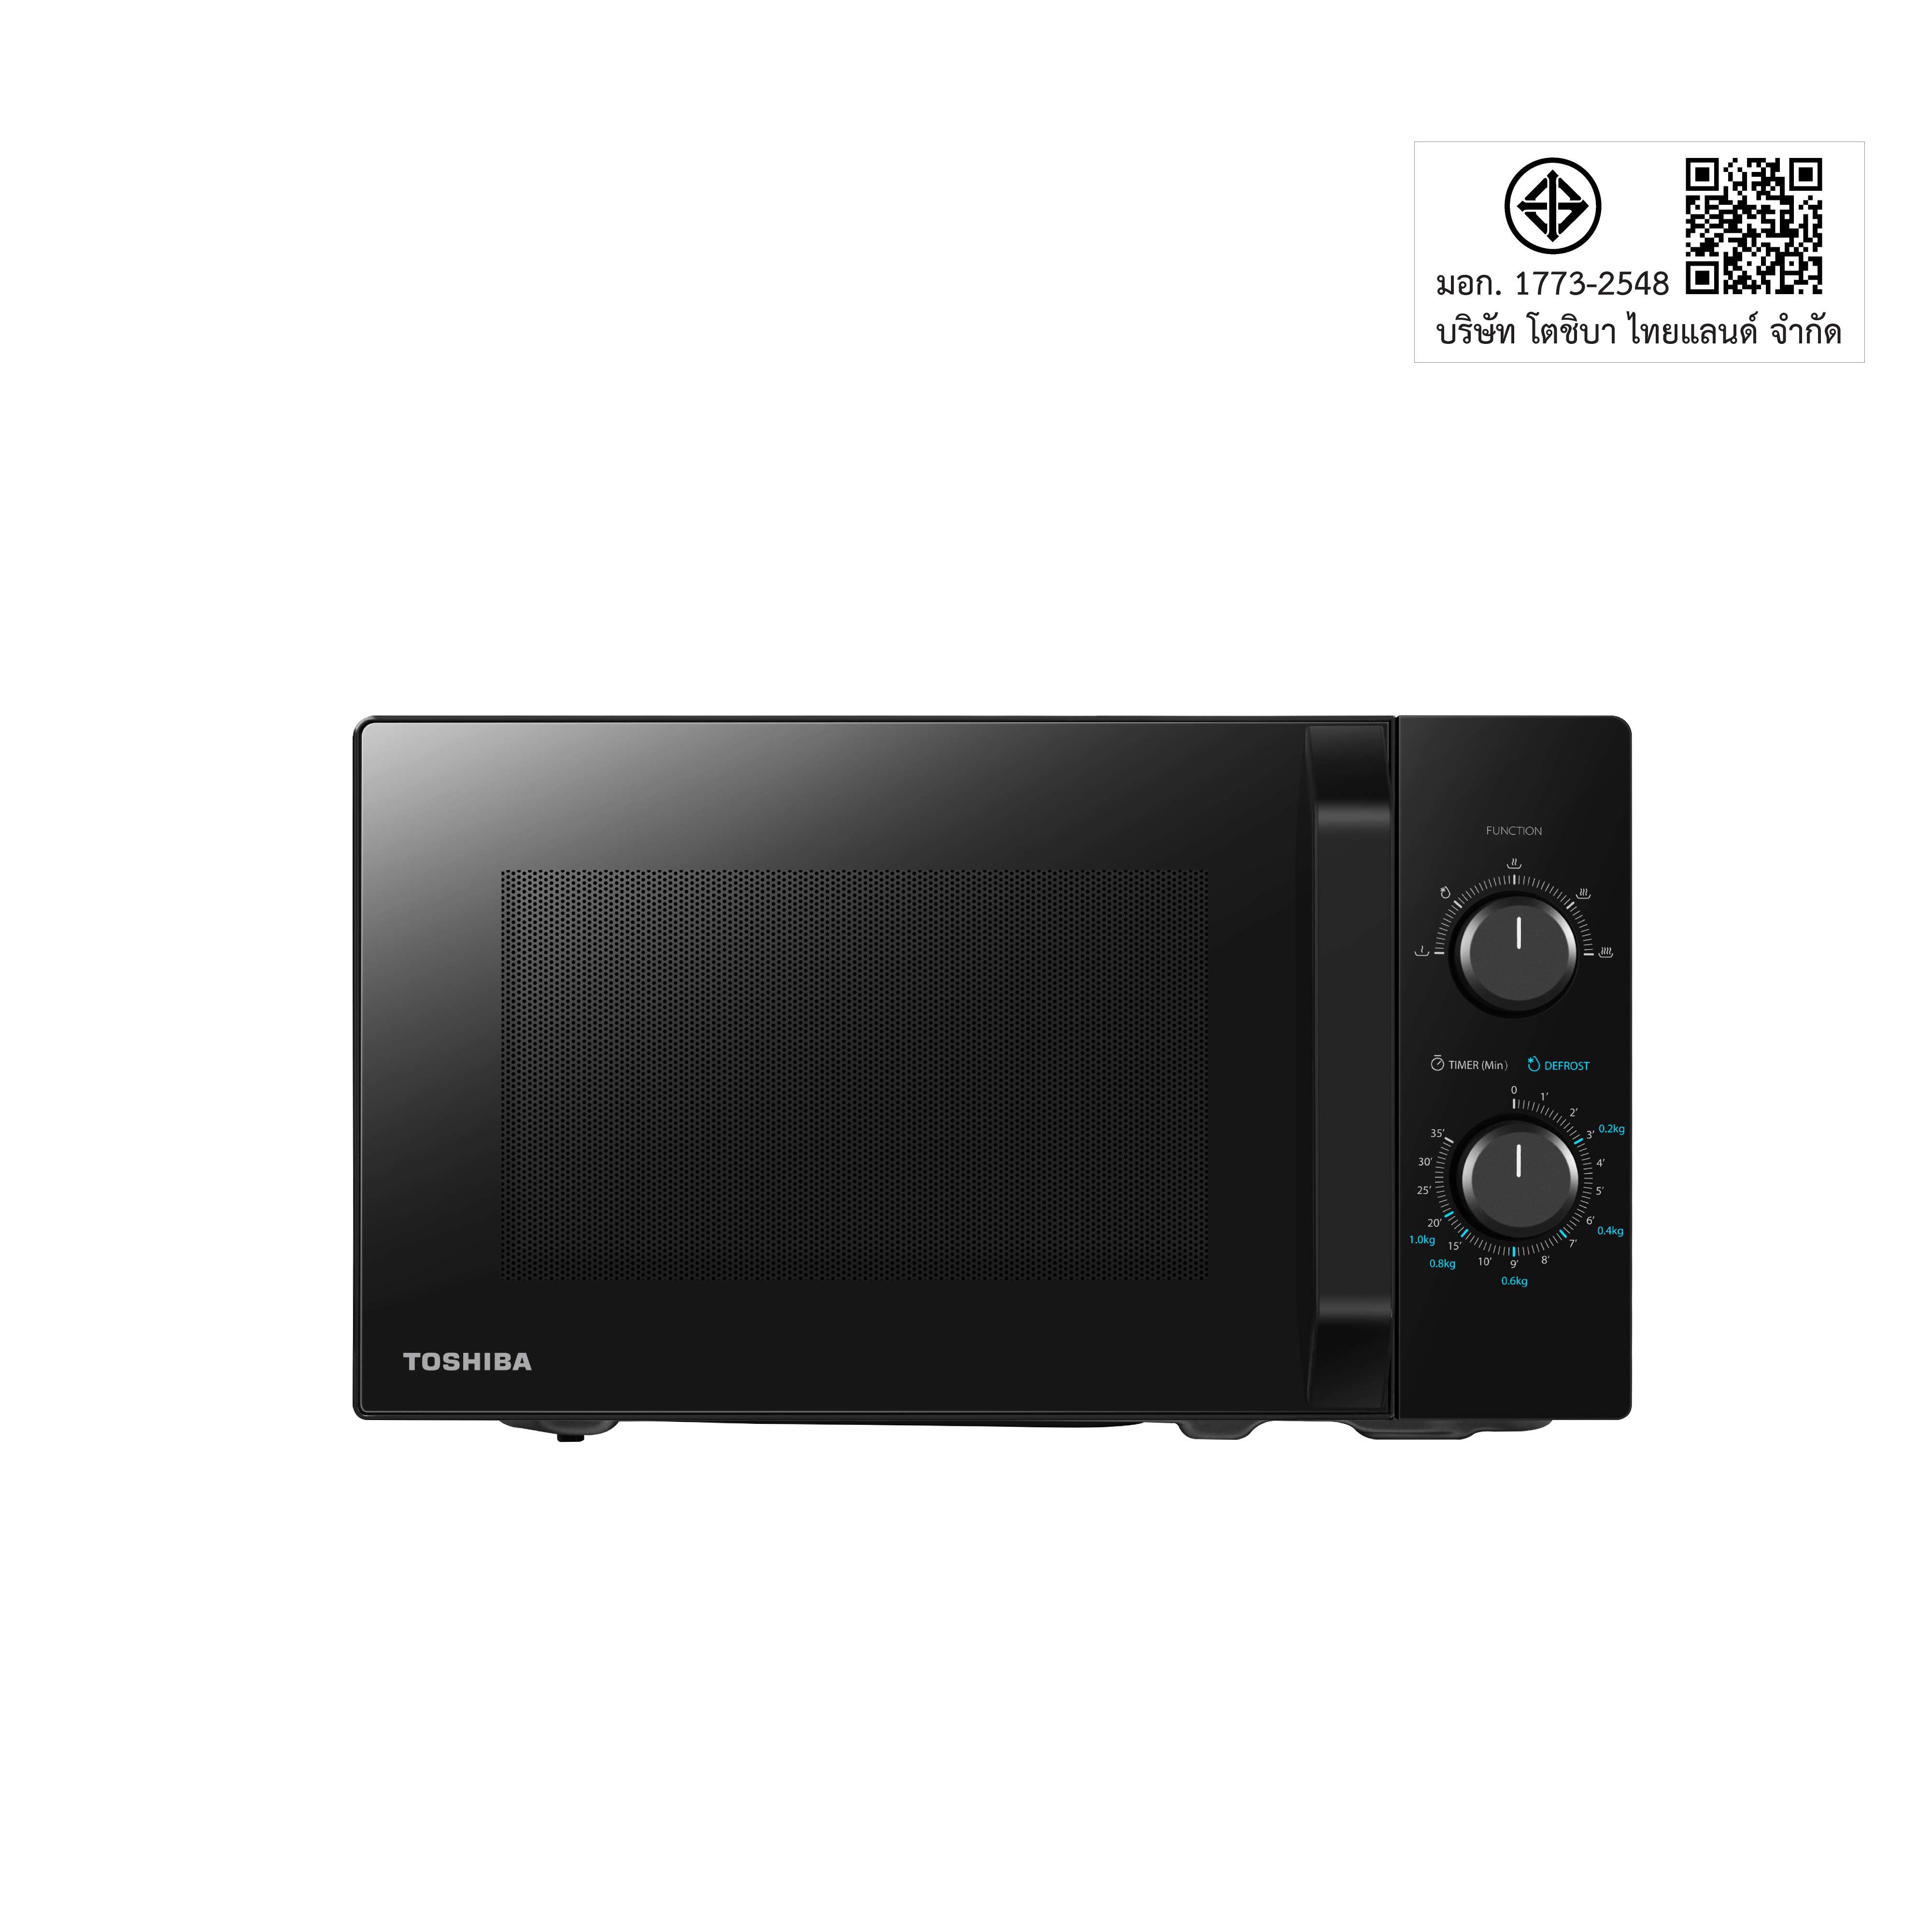 Toshiba 21L Microwave Oven - Black (MW2-MM21PF)